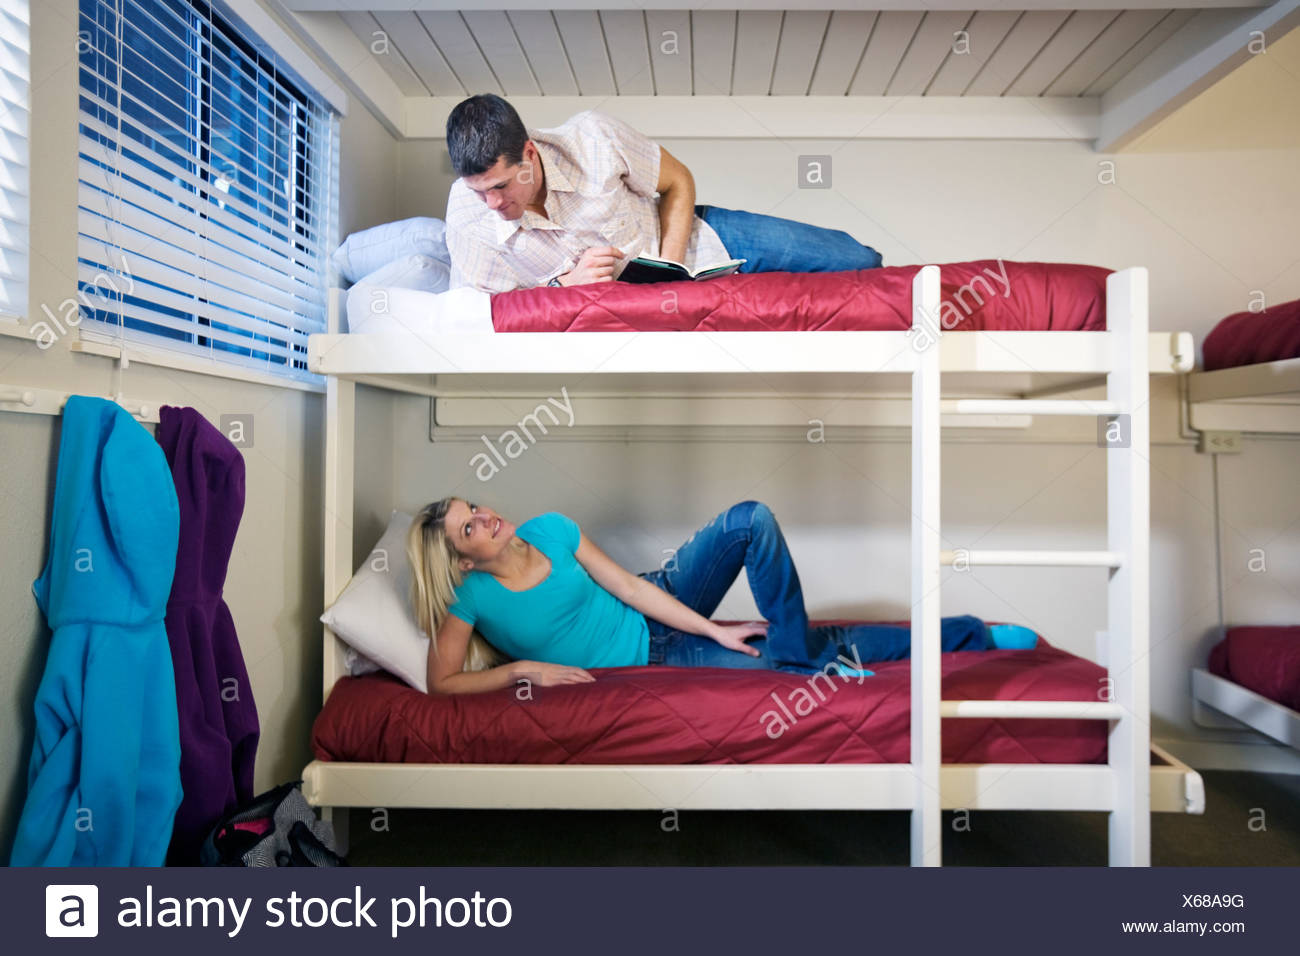 lodge bunk beds